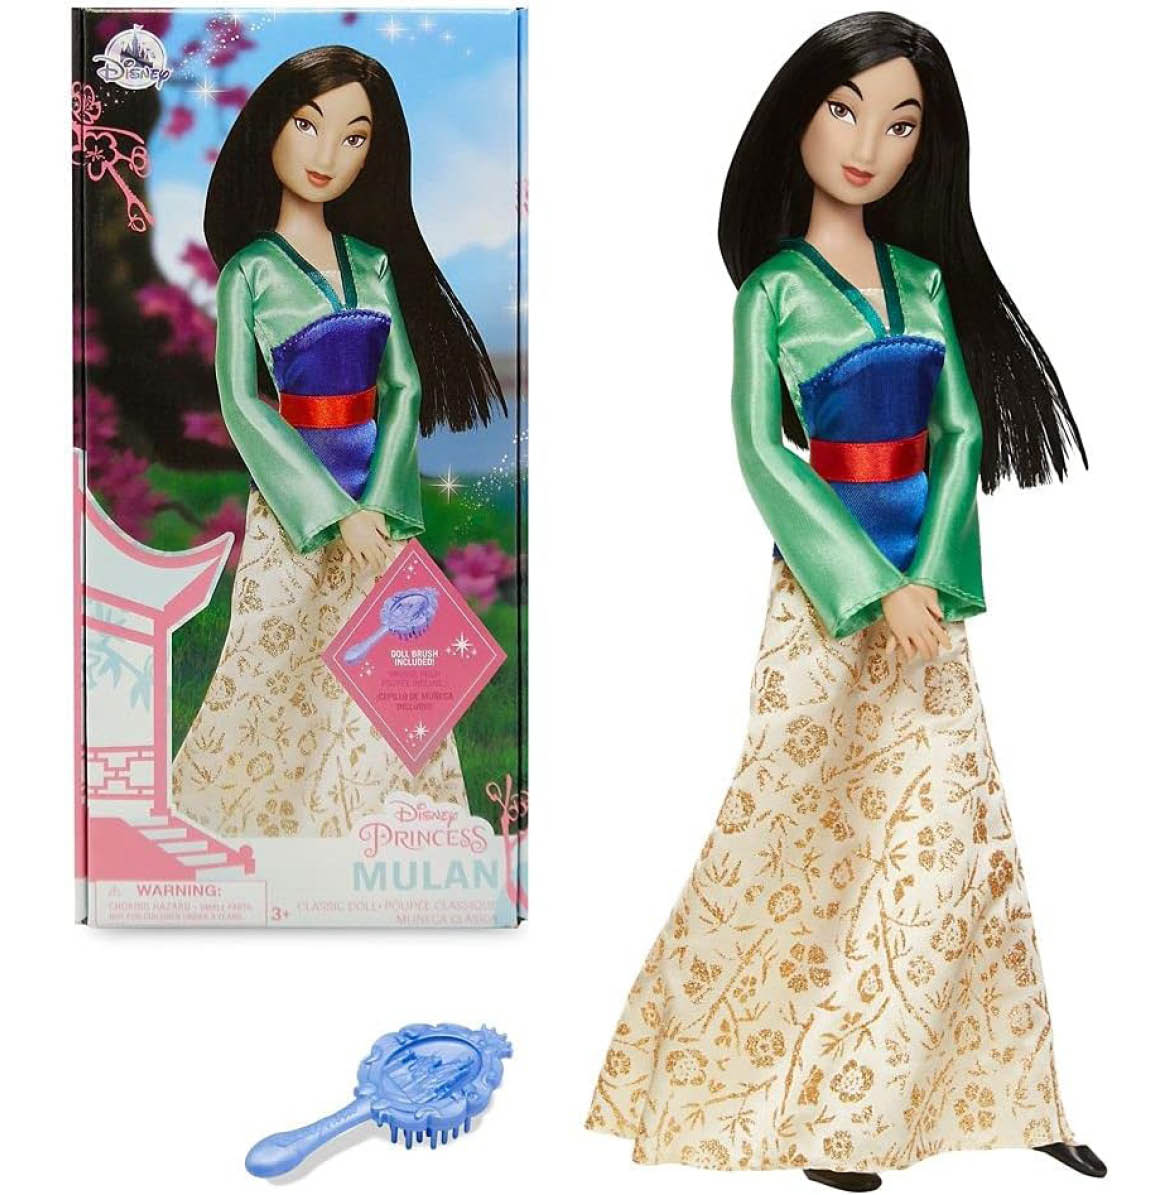 Disney Princess Mulan Classic Doll with Box